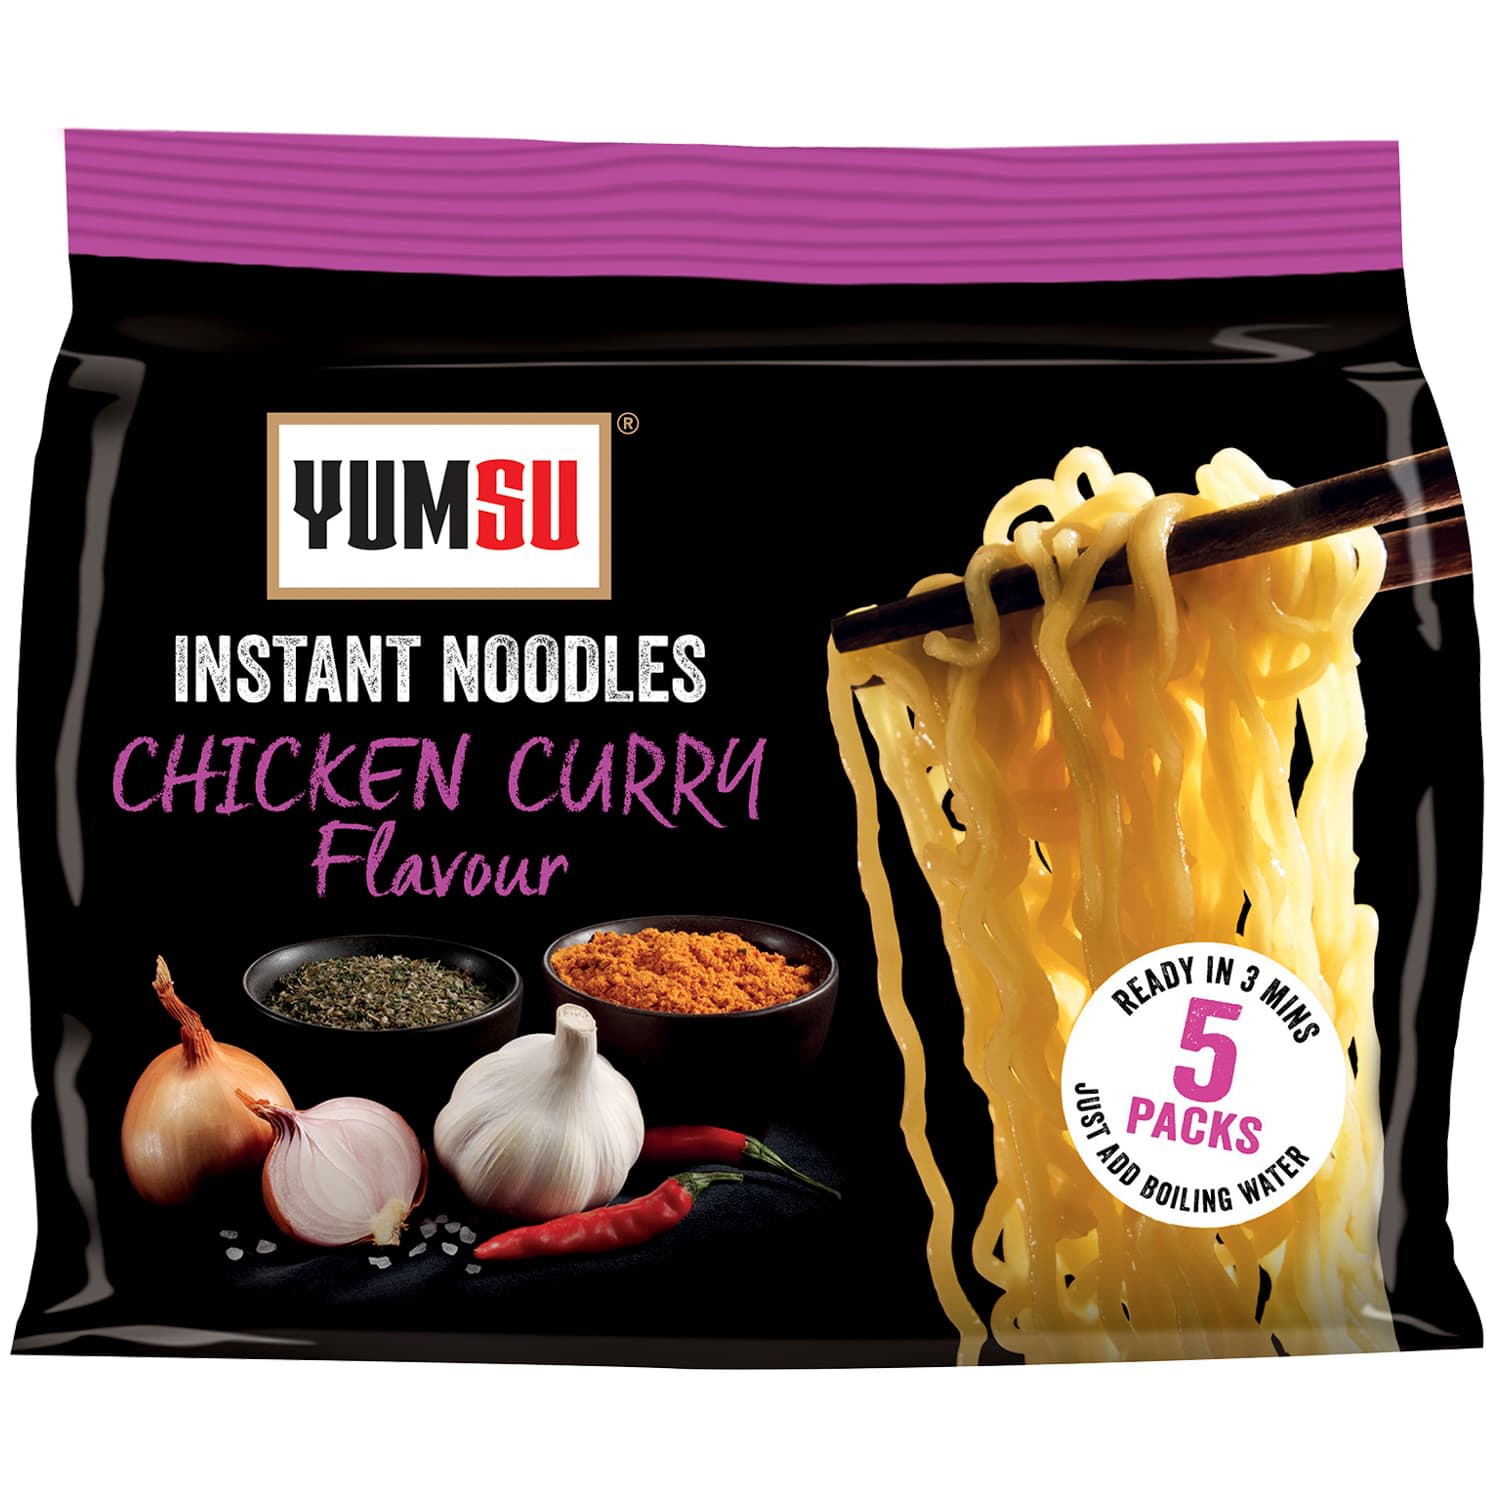 Yumsu Instant Noodles Chicken Curry Flavour 70g x 5pk